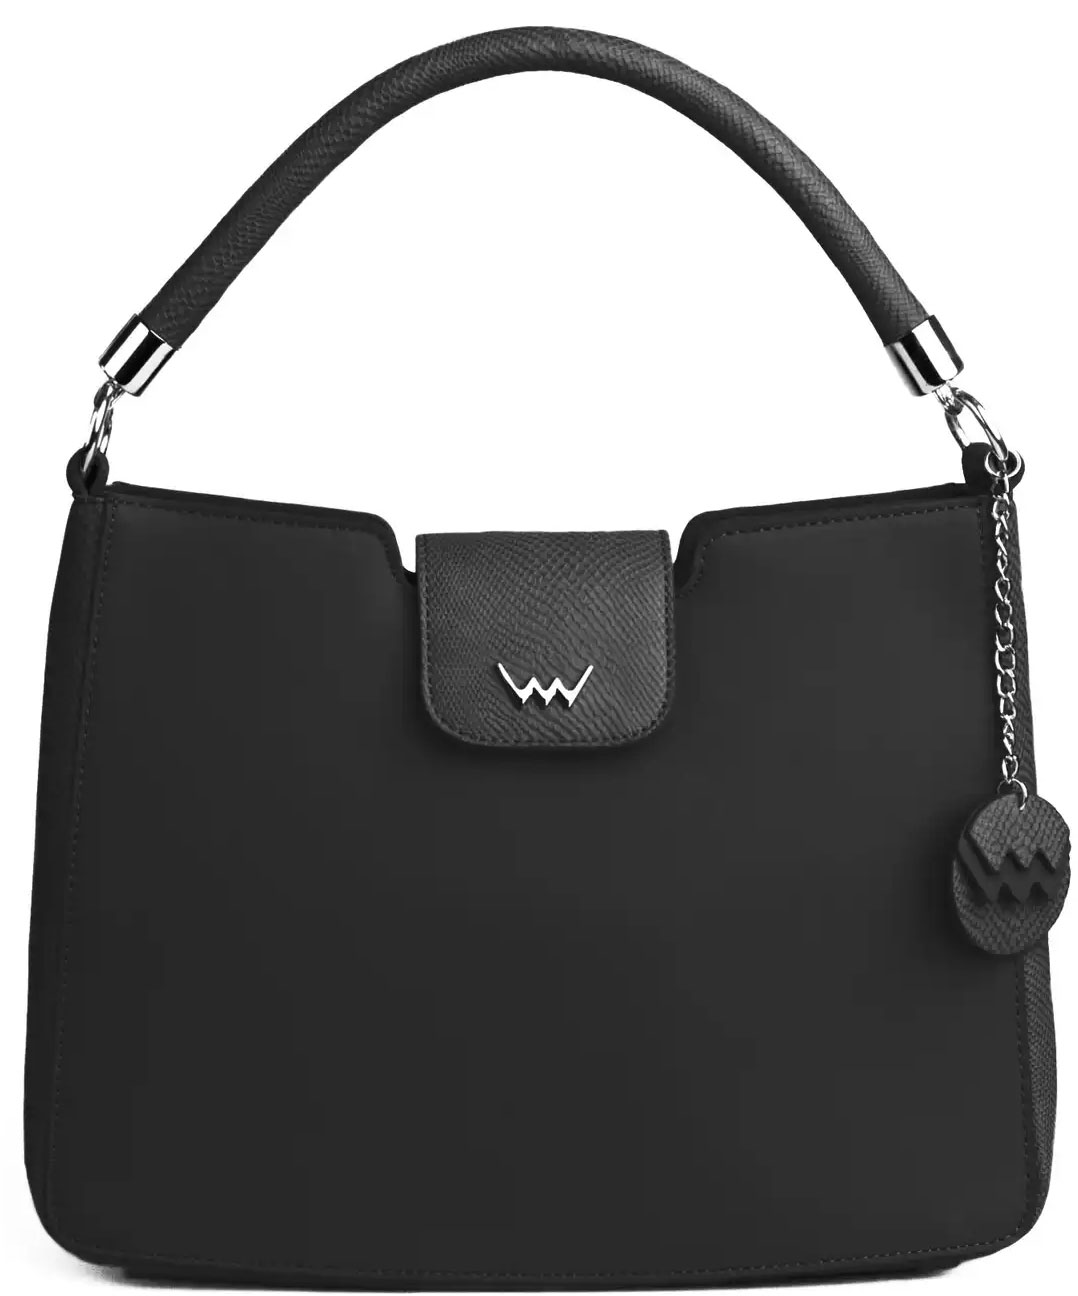 Women’s handbag